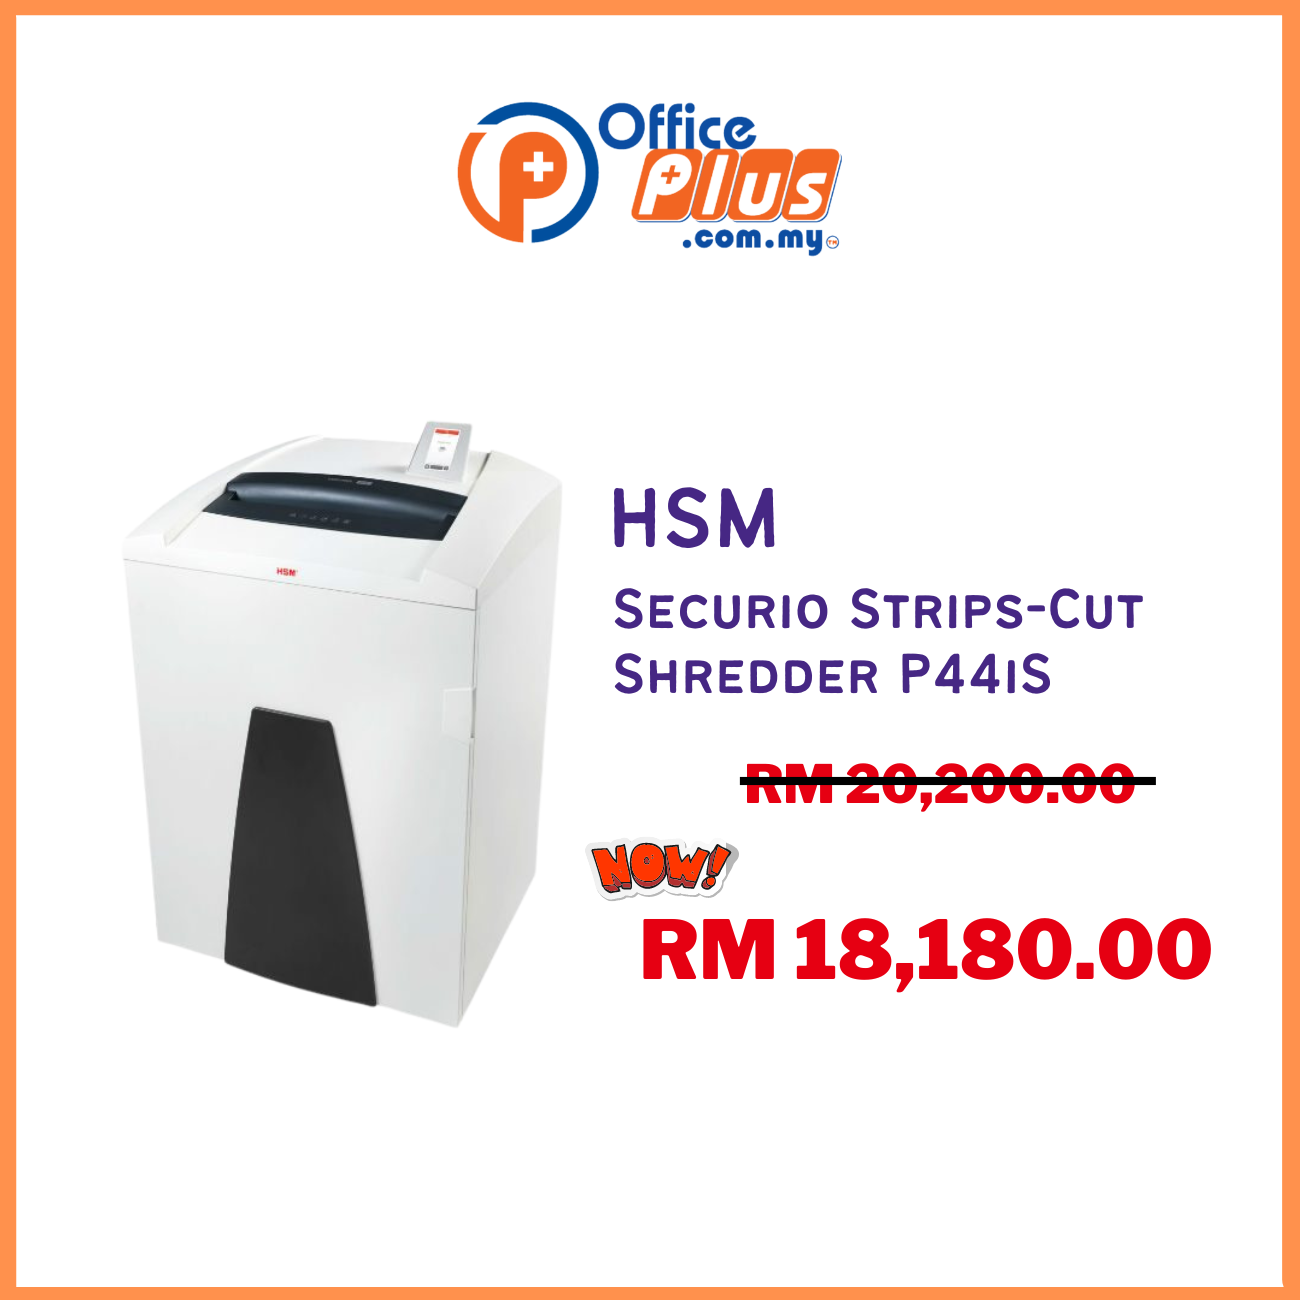 HSM Securio Strips-Cut Shredder P44iSS - OfficePlus